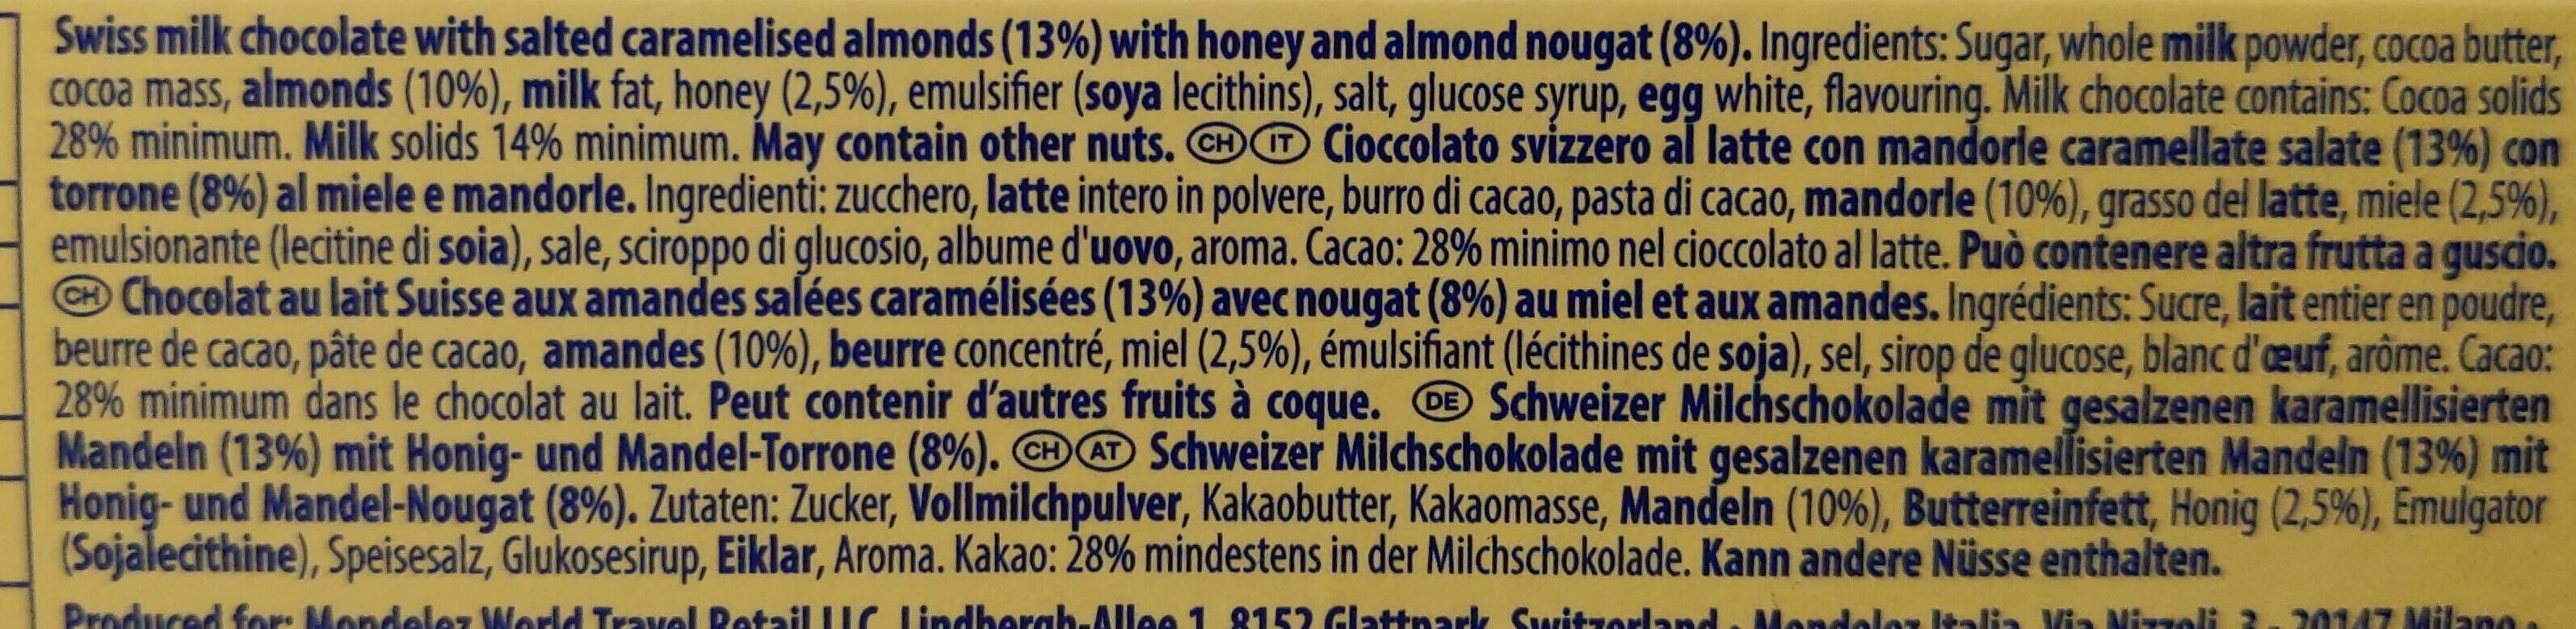 Toblerone crunchy almonds - Ingredienti - de